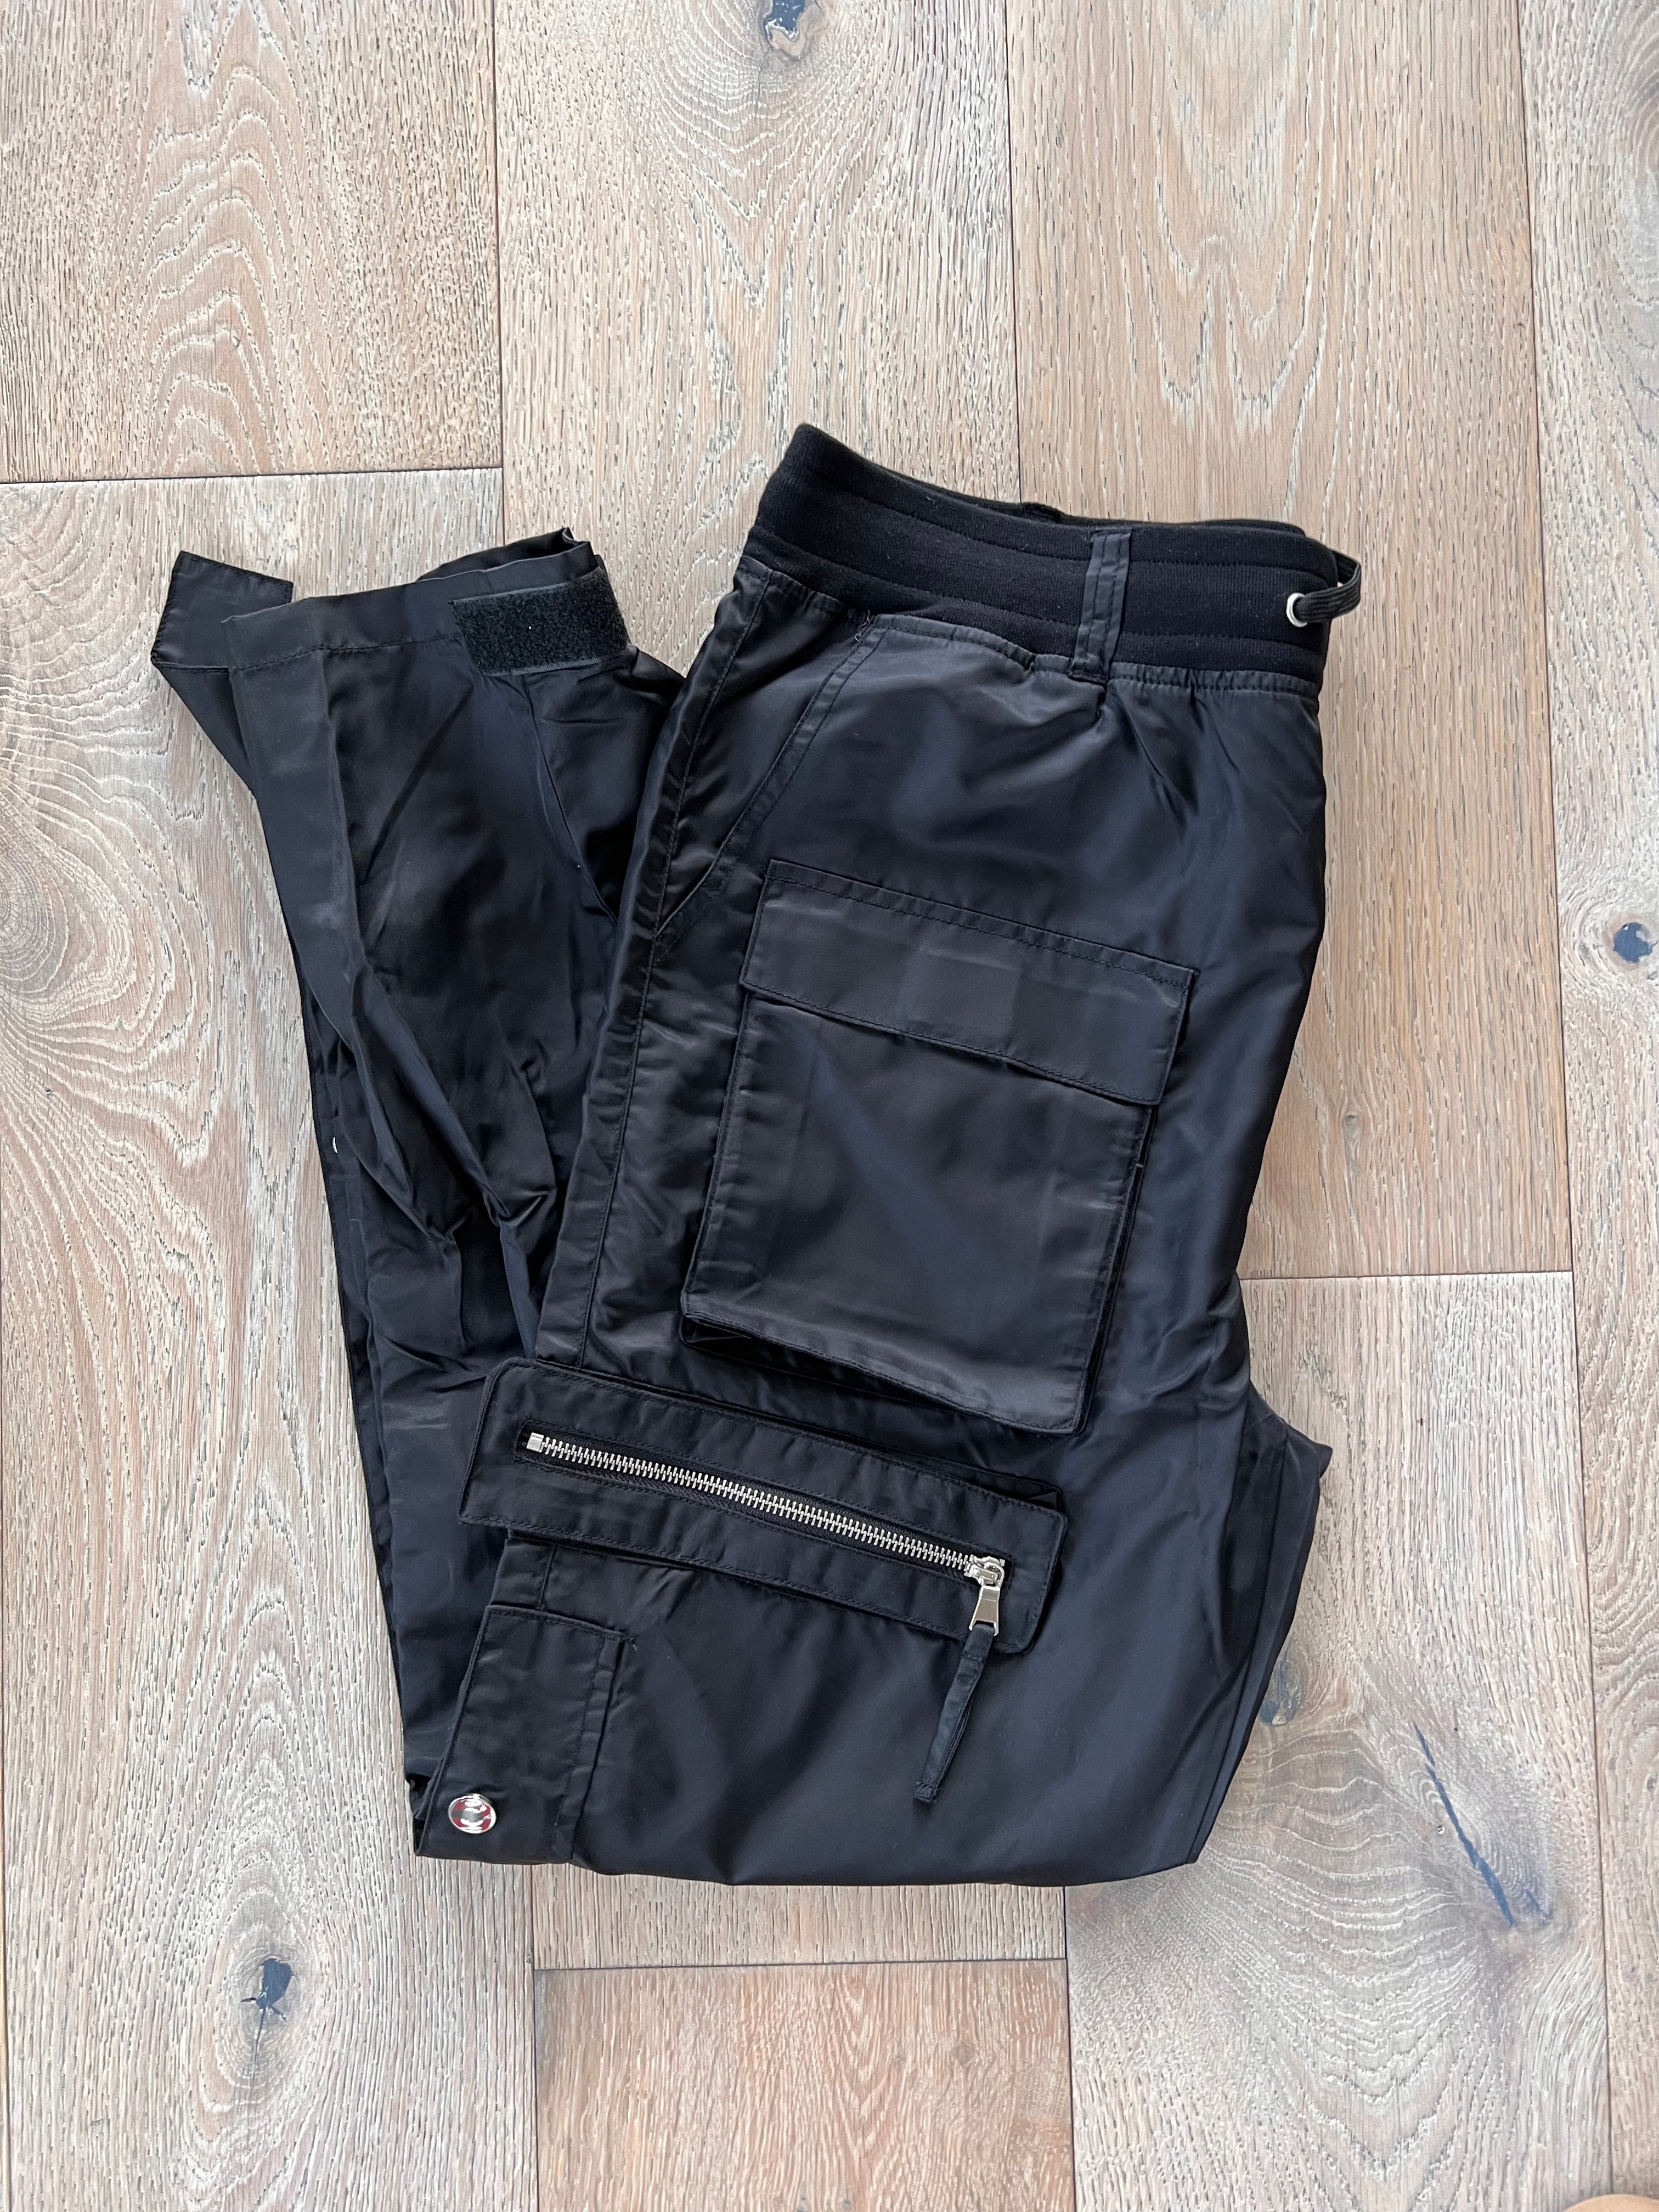 MLVince - Black Cargo Pants